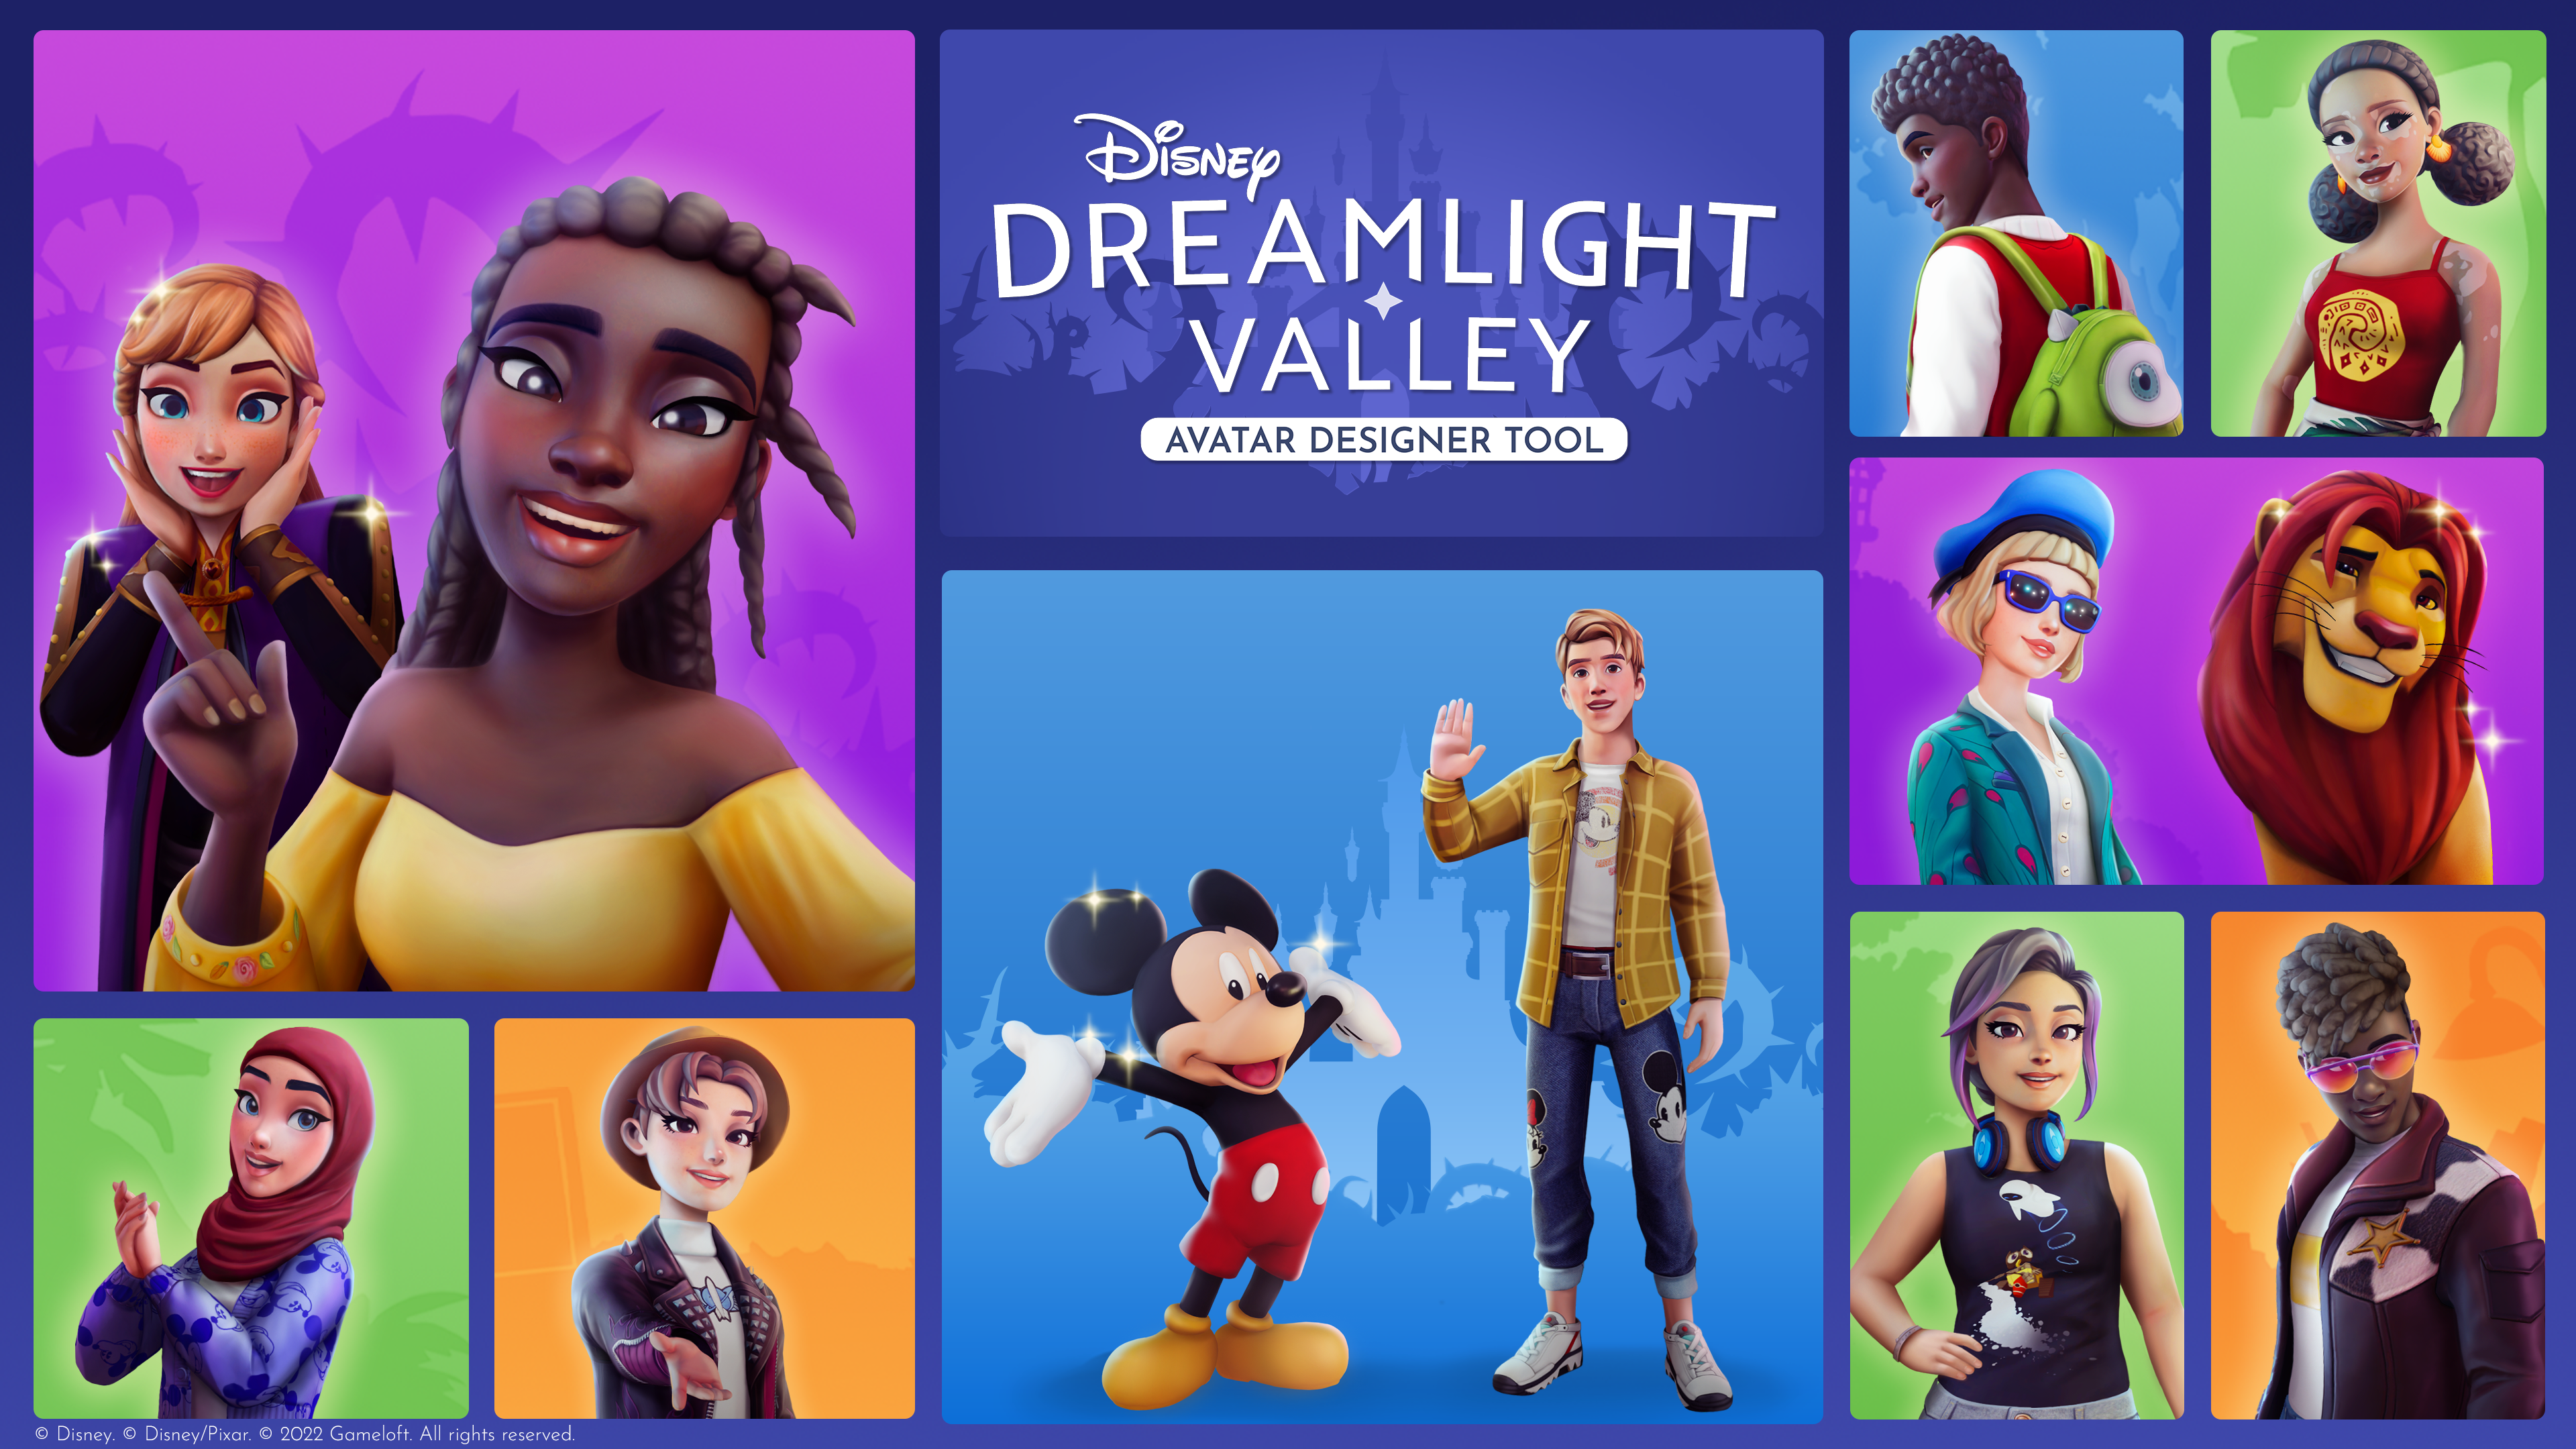 Disney Dreamlight Valley HD desktop wallpaper featuring colorful avatars from the Avatar Designer Tool.